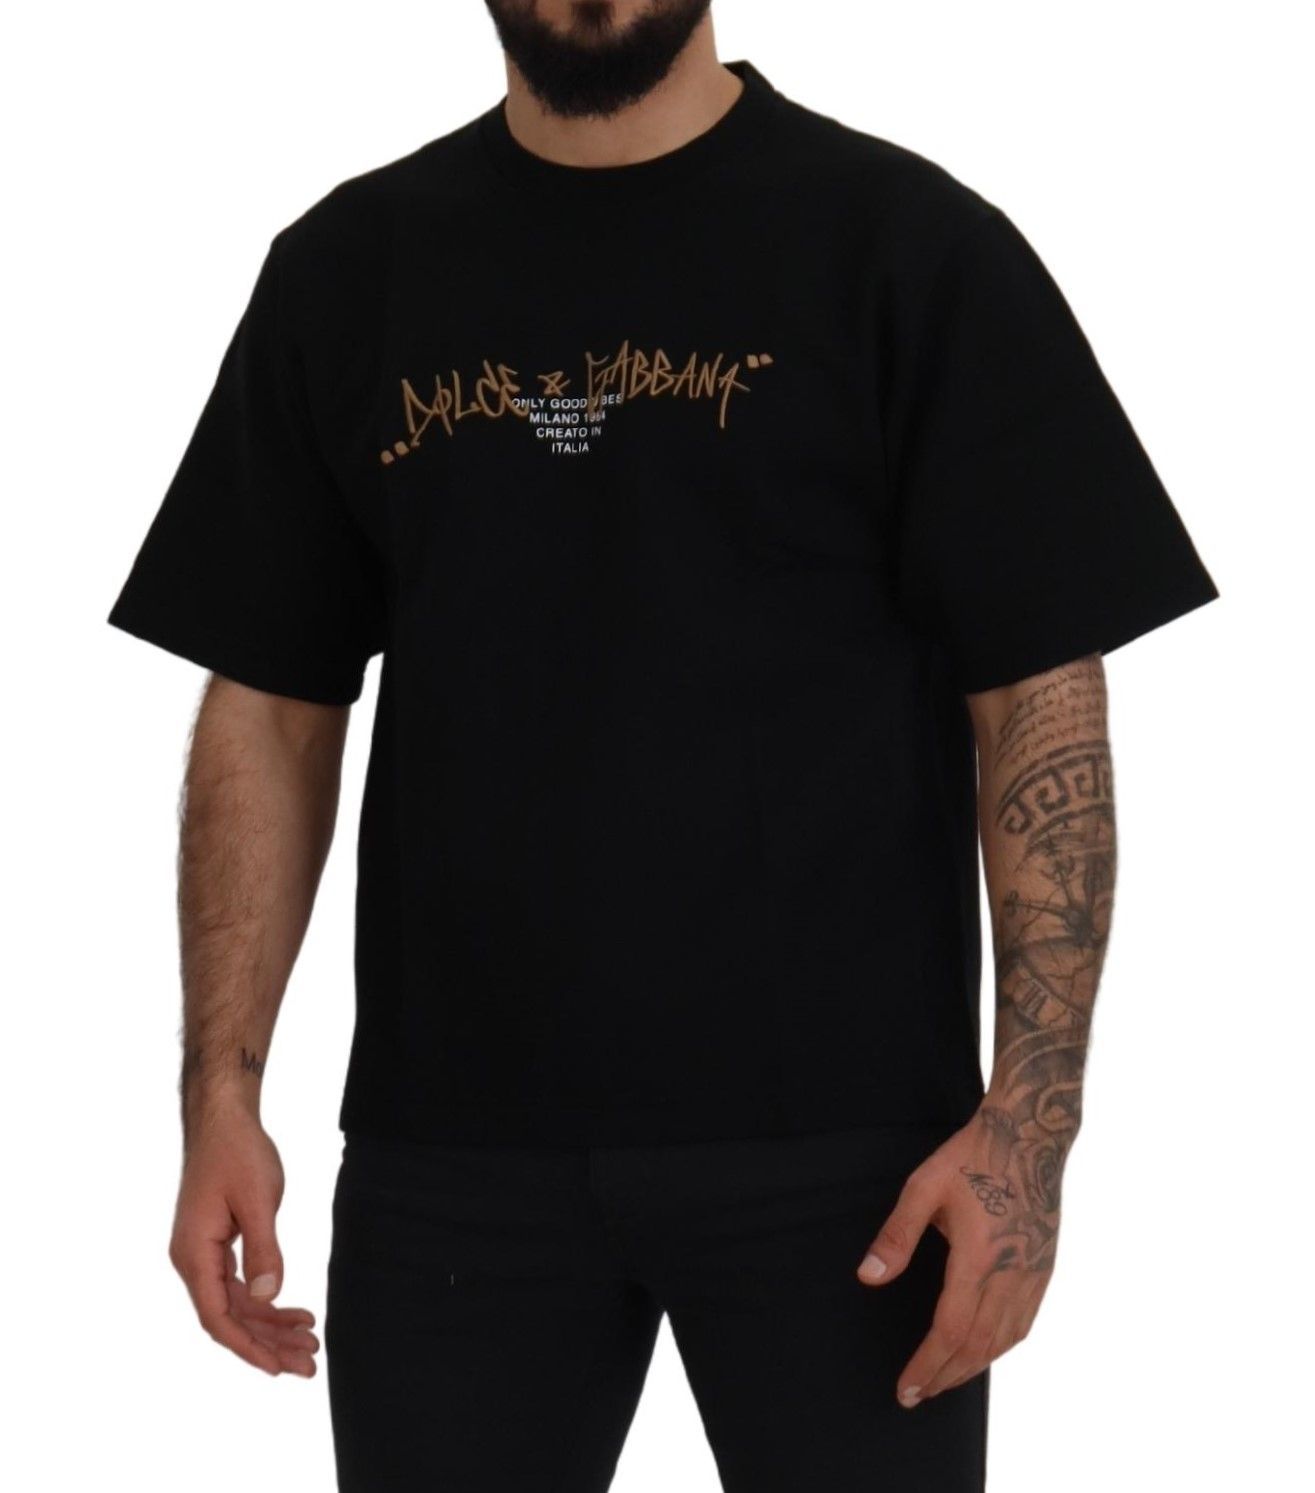 Elegant Black Cotton Blend Crewneck T-Shirt